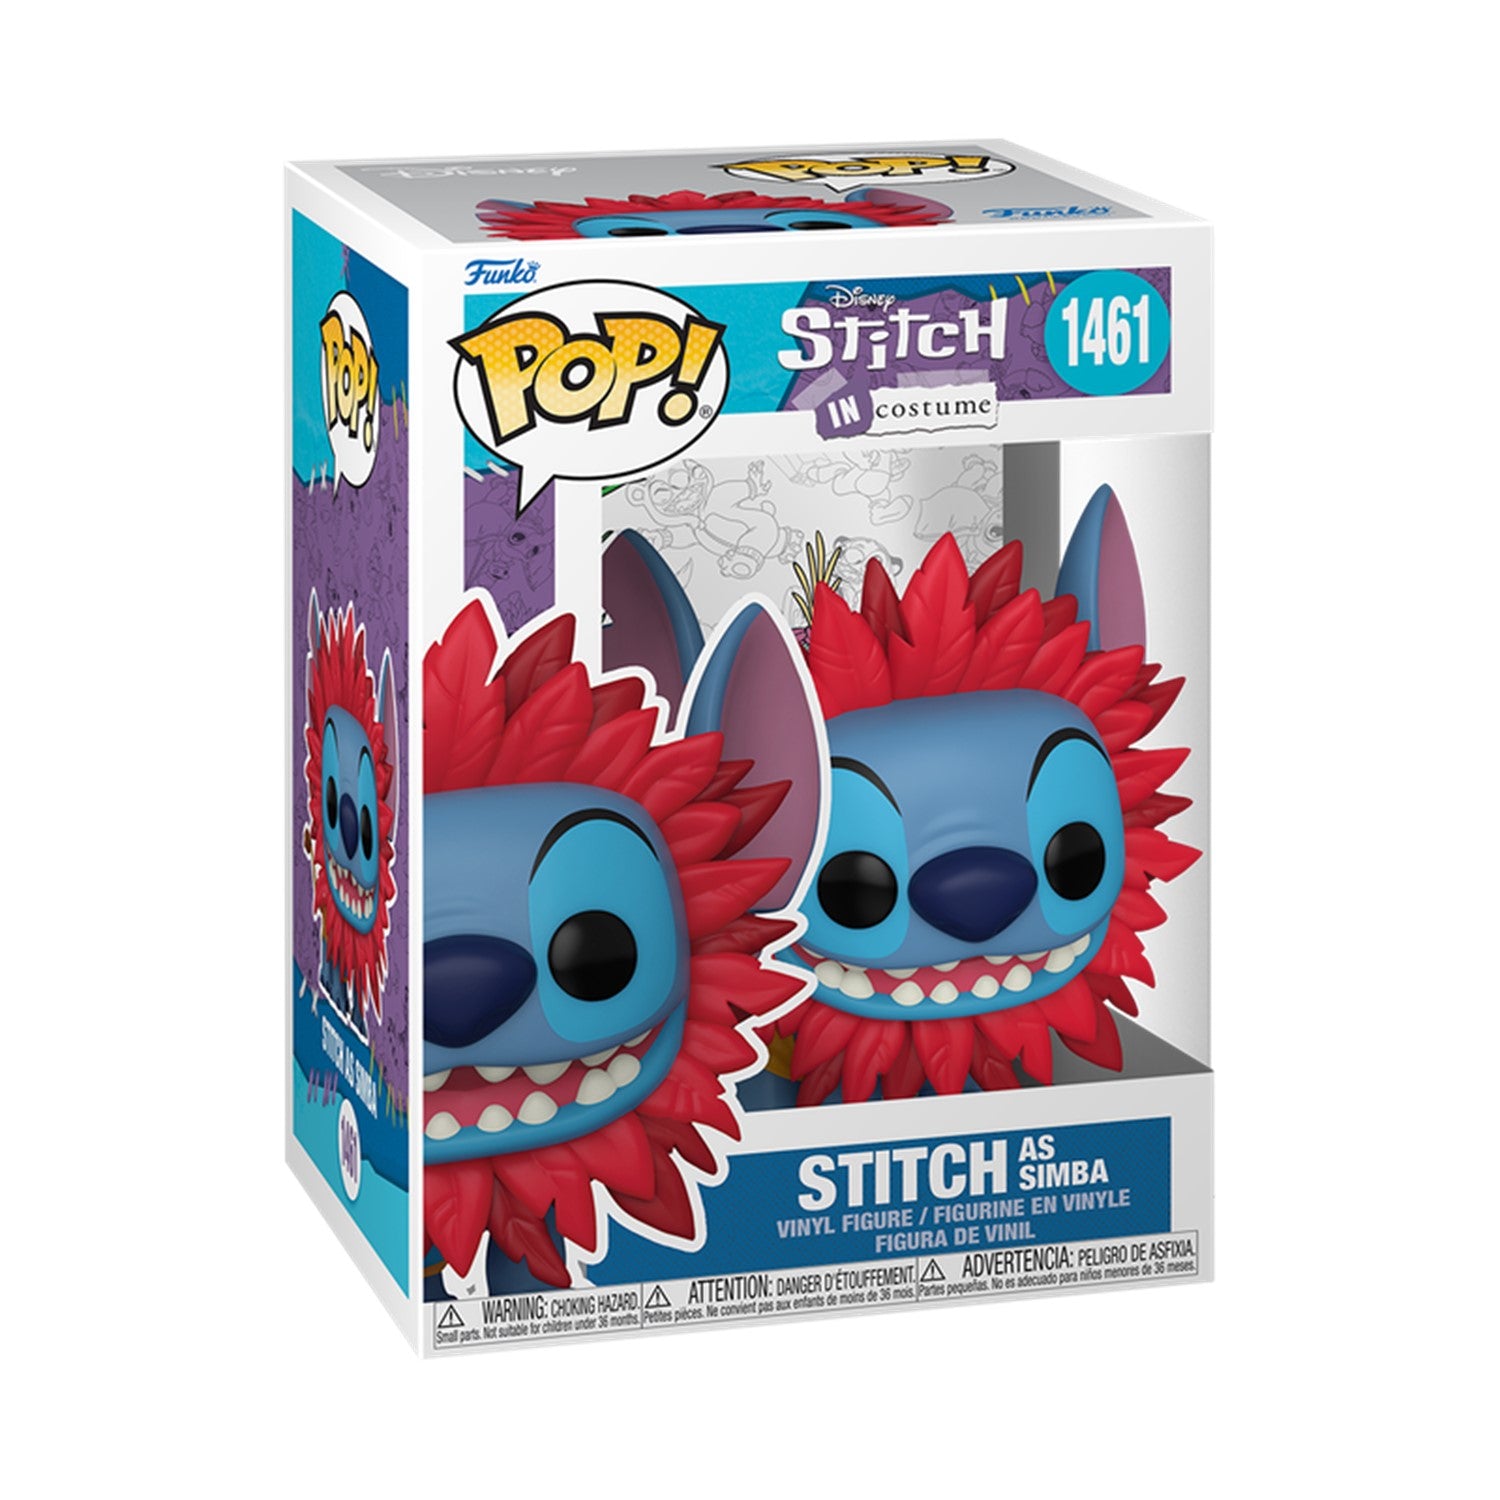 POP! Stitch as Simba | L.A. Mood Comics and Games